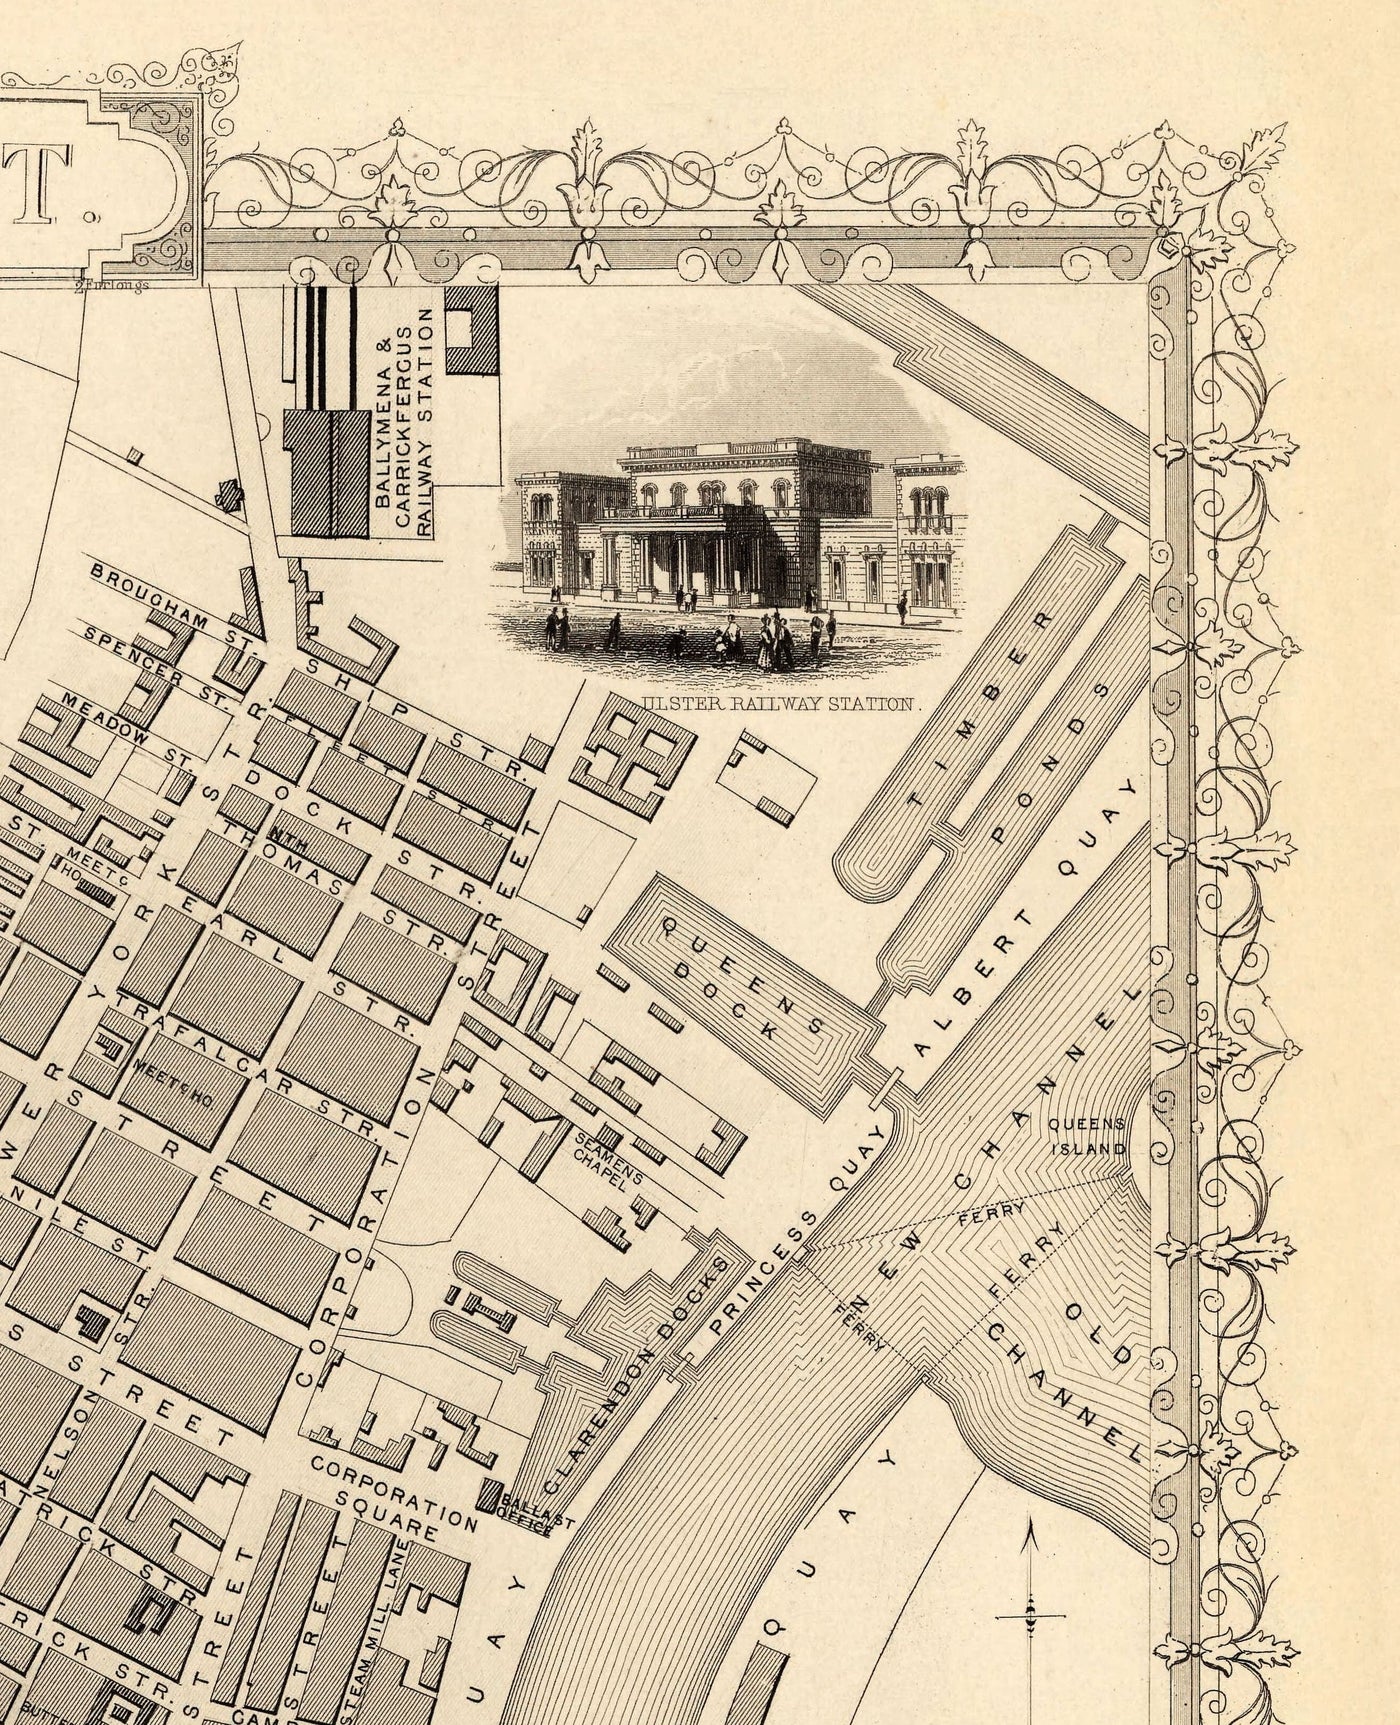 Ancienne carte de Belfast, Irlande en 1851 par Tallis & Rapkin - Queens College, gare ferroviaire de l'Ulster, bureau des ballasts,